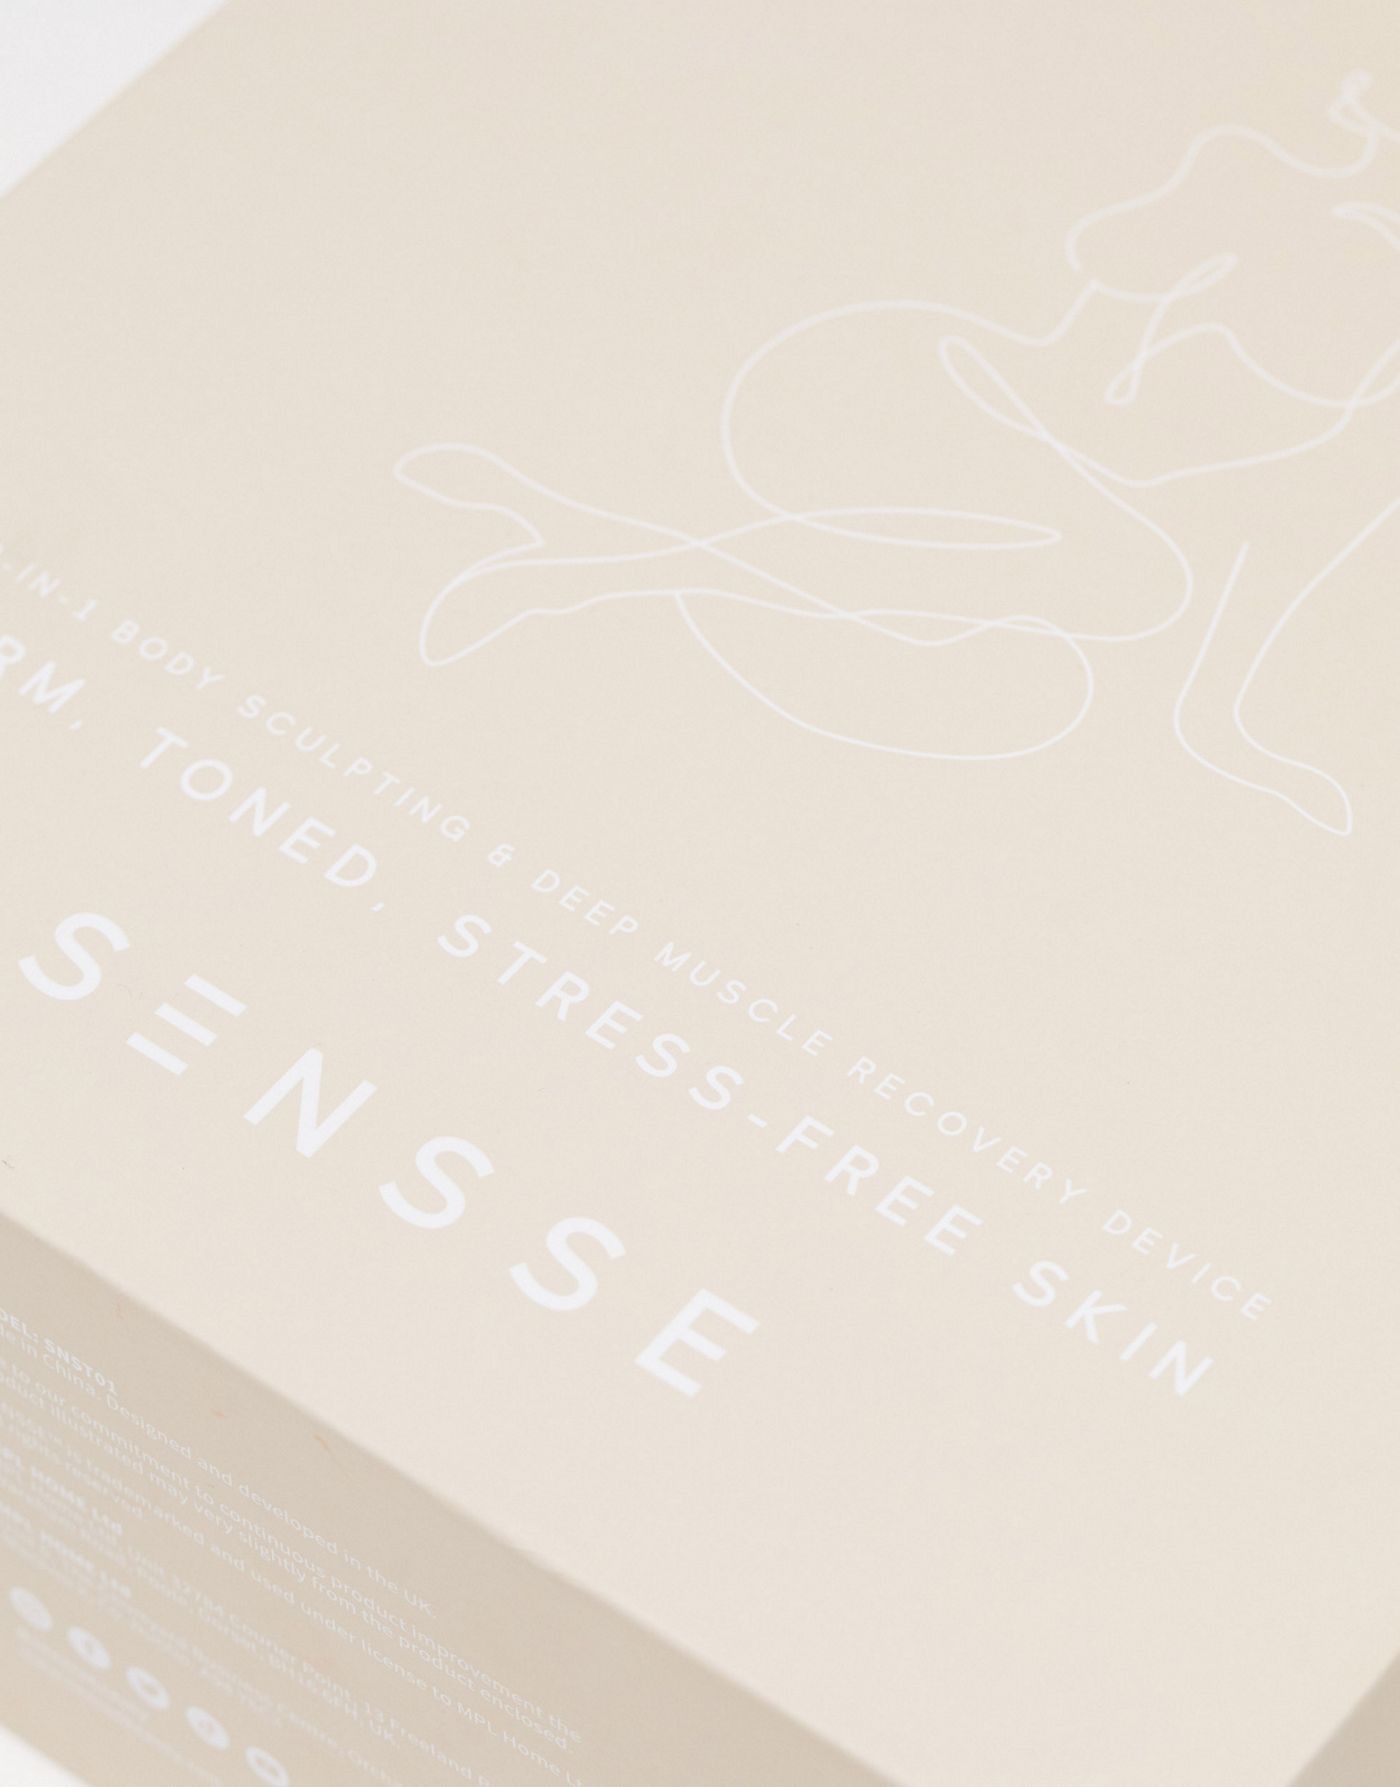 SENSSE Silhouette Skin Toner and Deep Tissue Massage Device